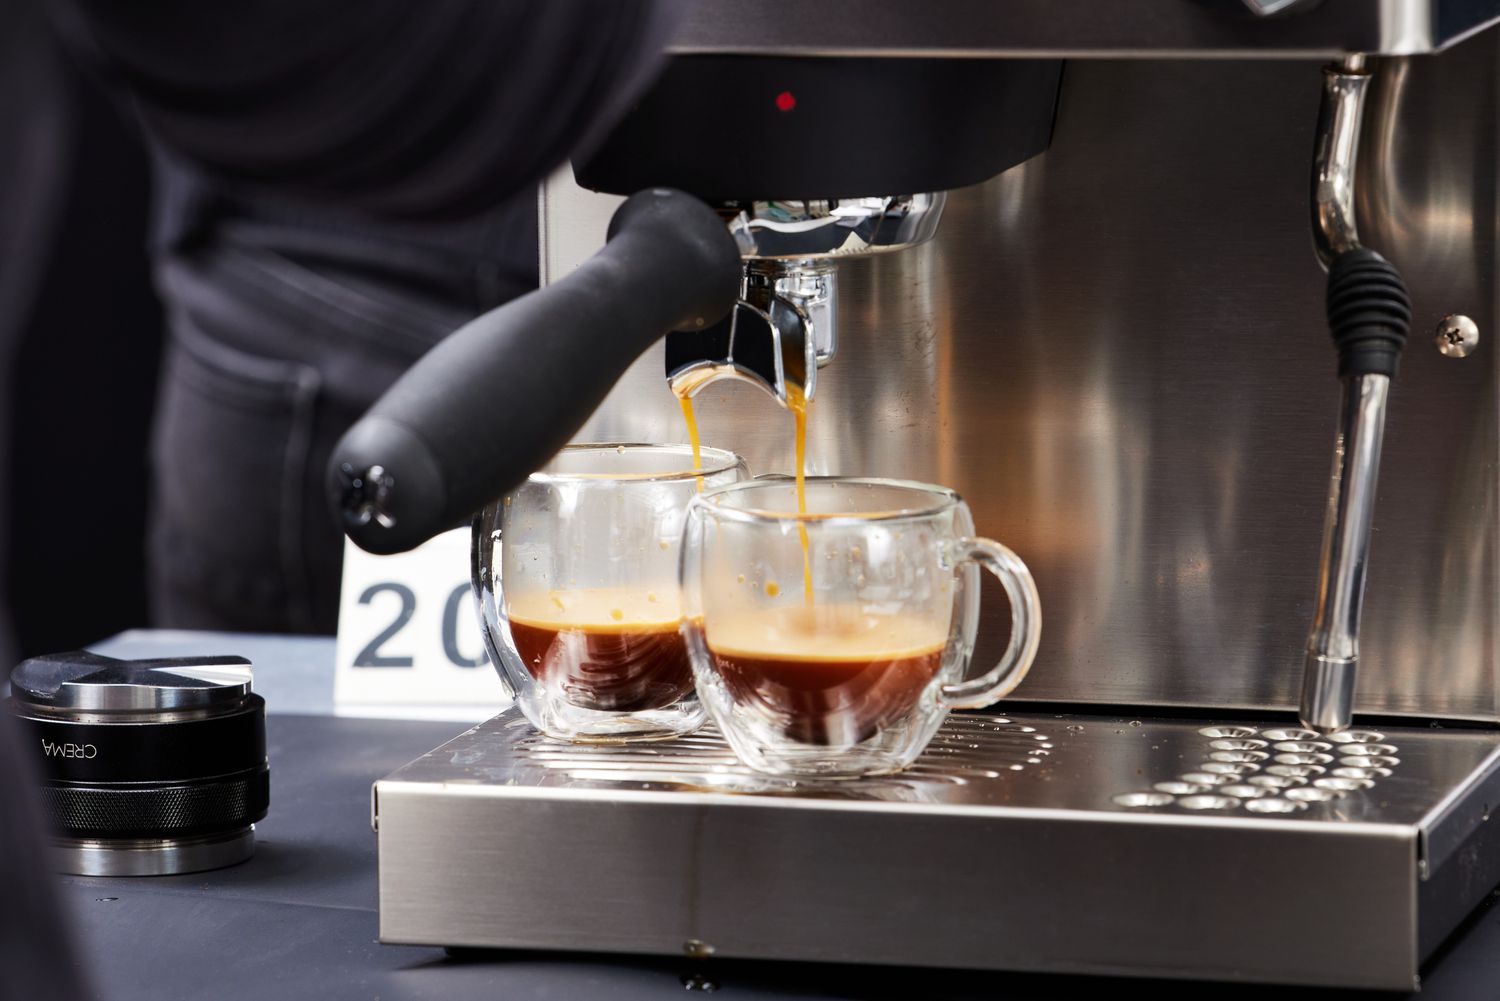 Two shots of espresso being brewed using the Rancilio Silvia Espresso Machine.